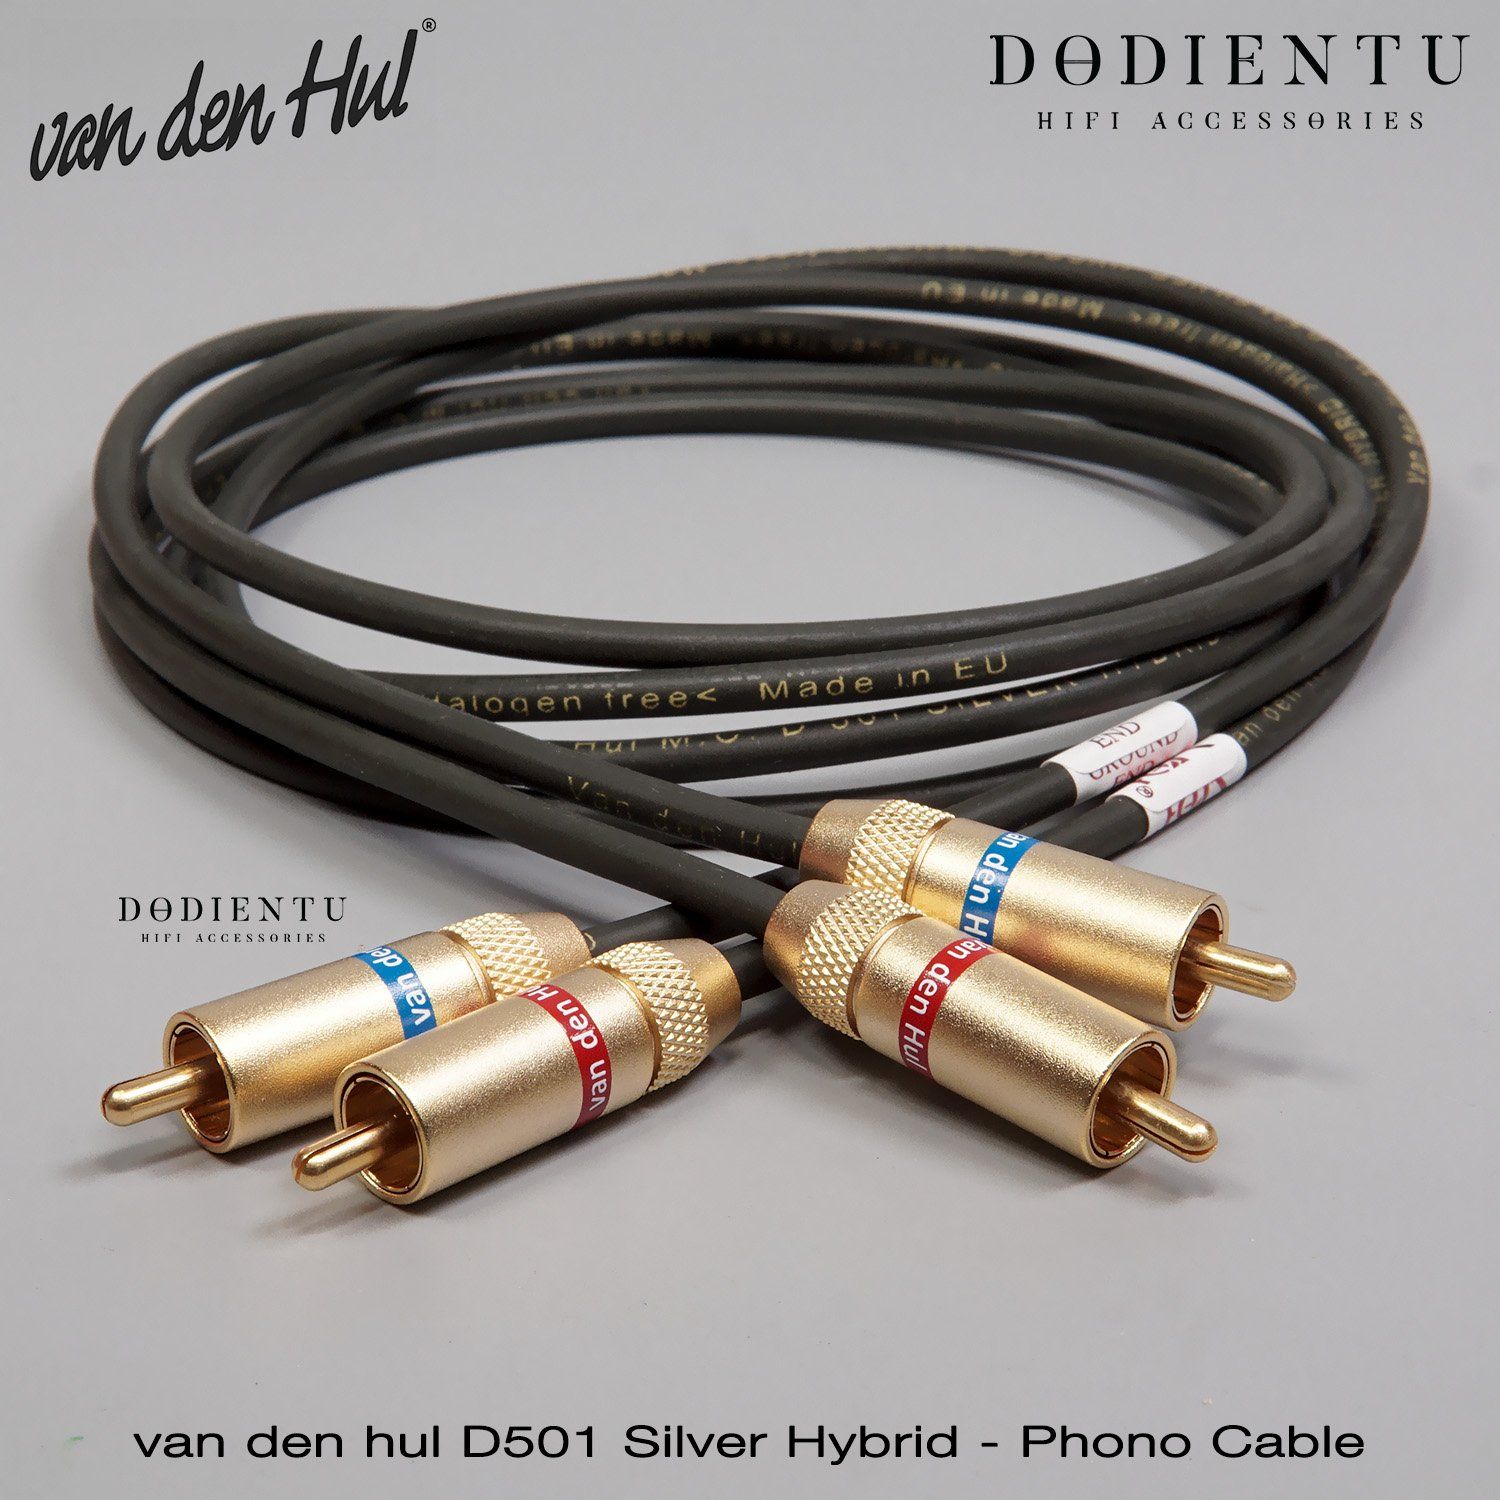 van den hul - The D 501 Silver Hybrid - Phono Cable RCA - RCA